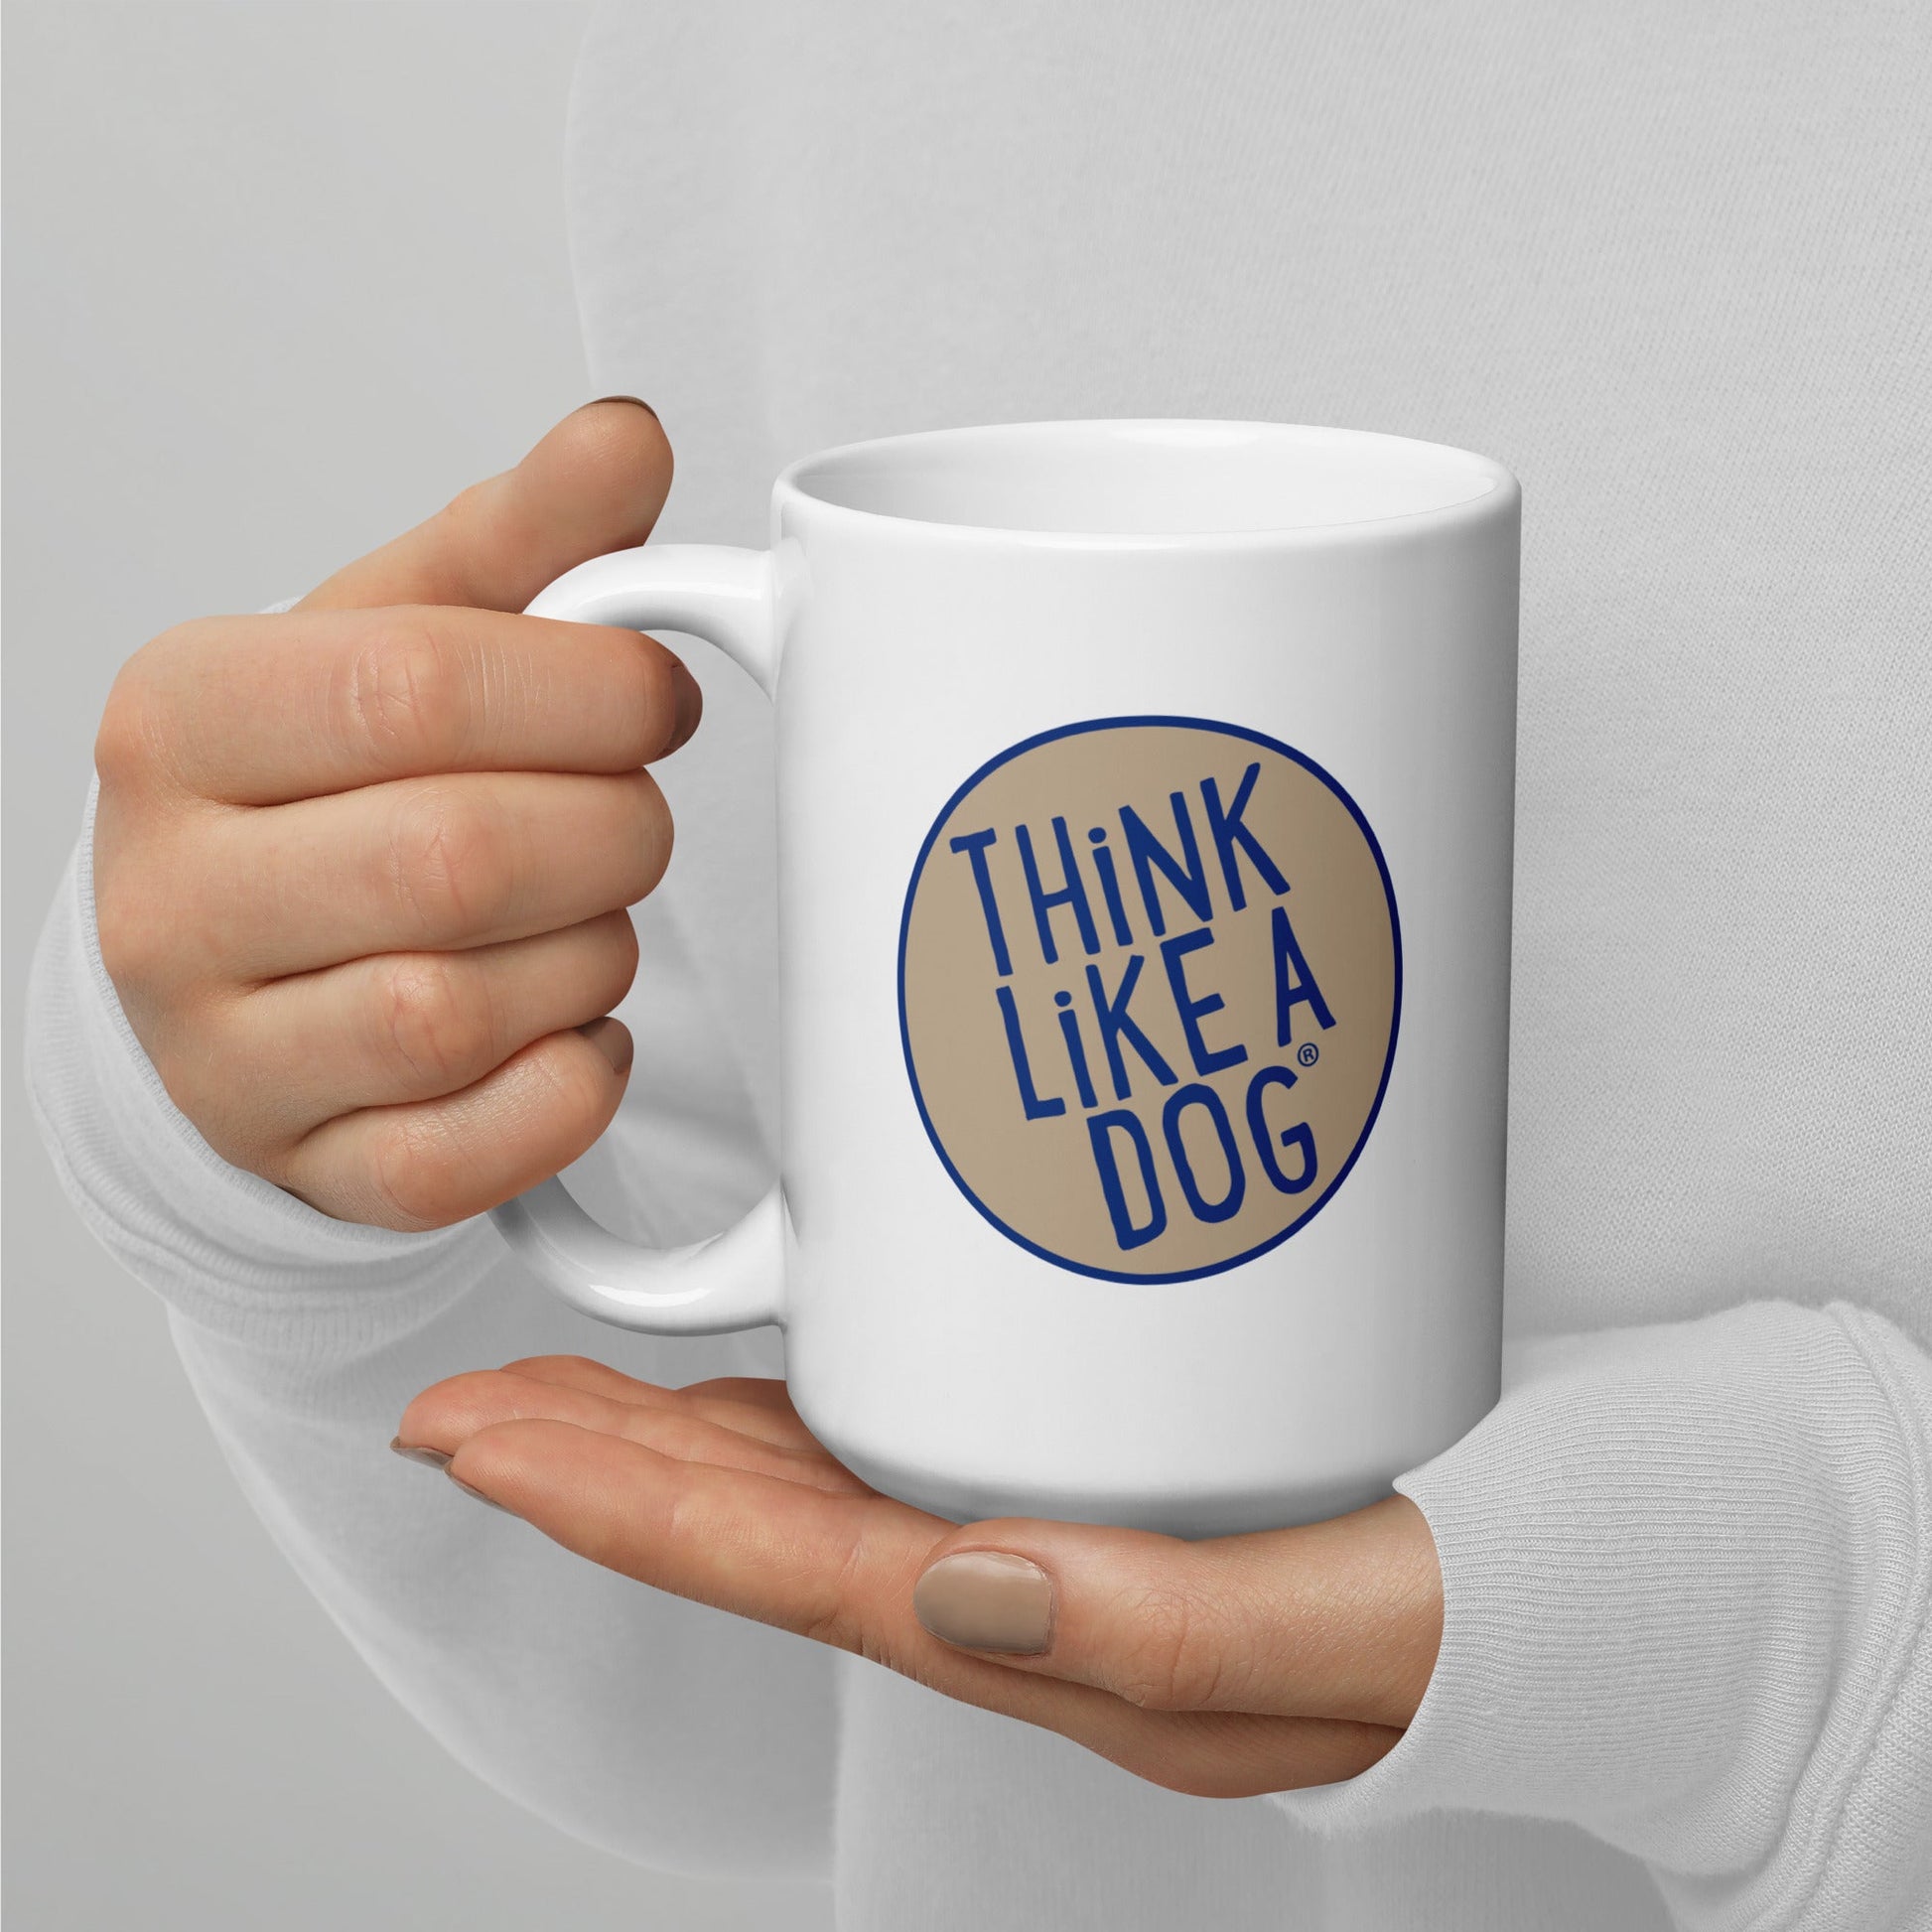 Think like a dog, THINK LiKE A DOG® Blue & Tan Colorway Logo on White Glossy Mug for dog lovers.